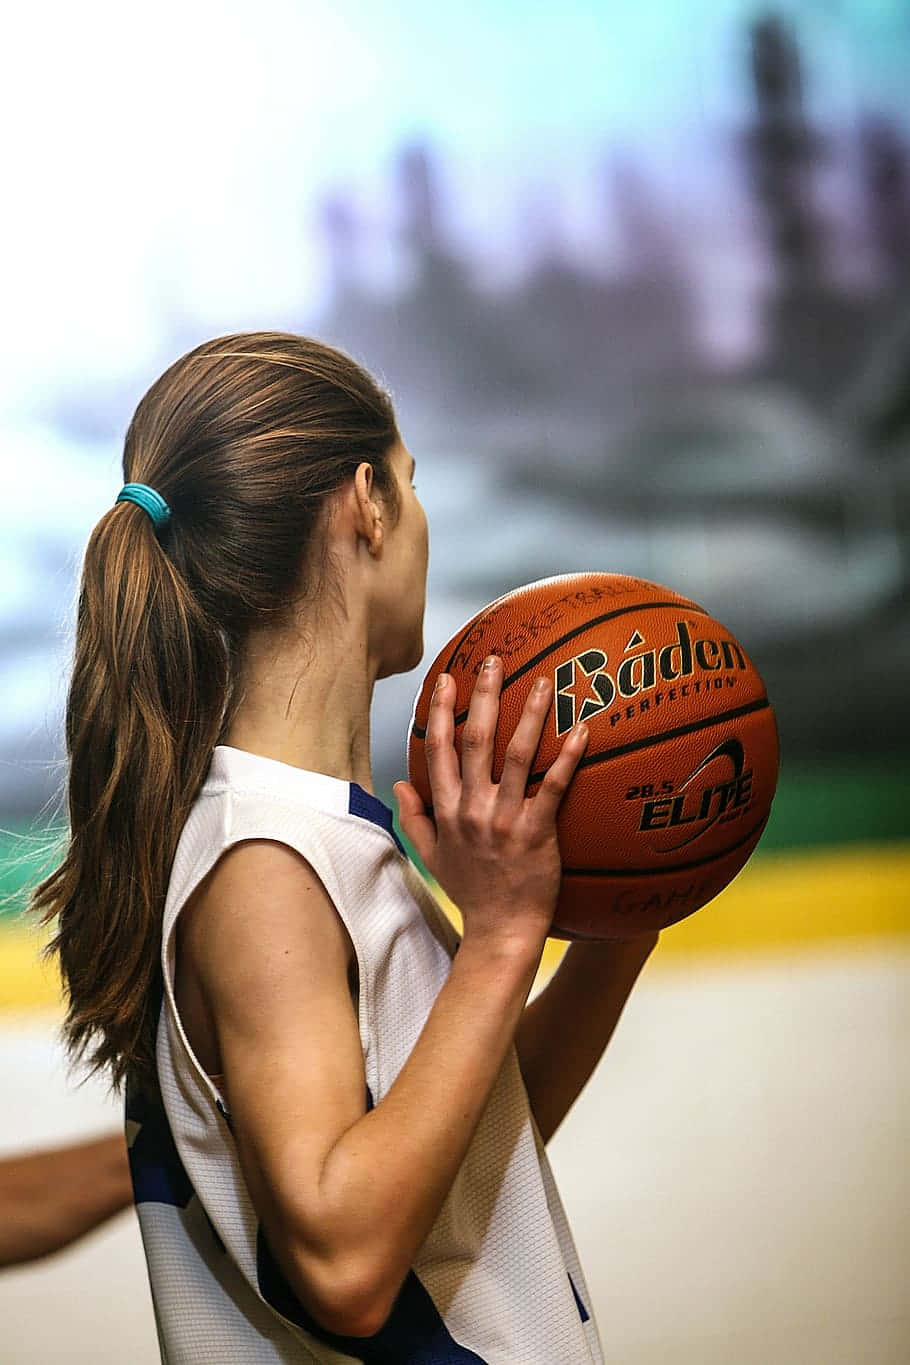 Focused Player Preparing Free Throw Basketball Wallpaper